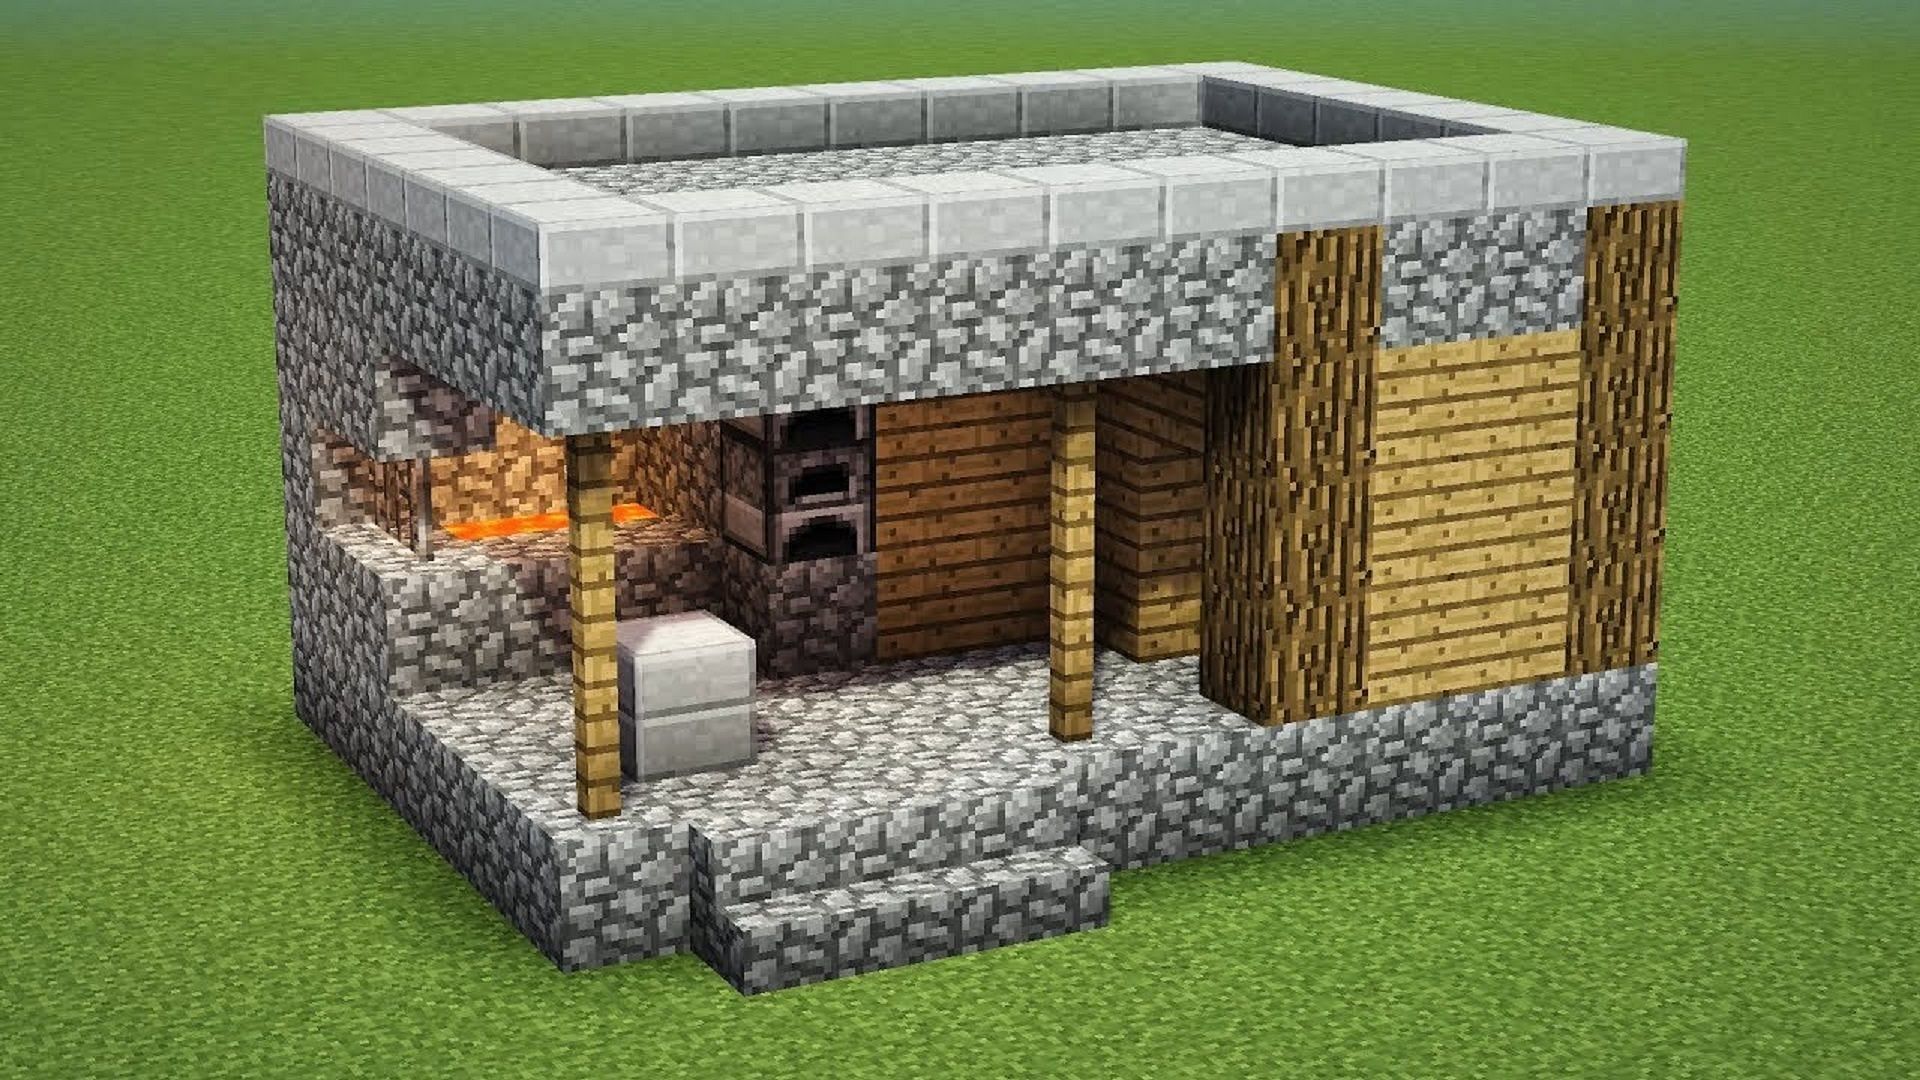 A village blacksmith shop in Minecraft (Image via Skrynnik Dima/YouTube)